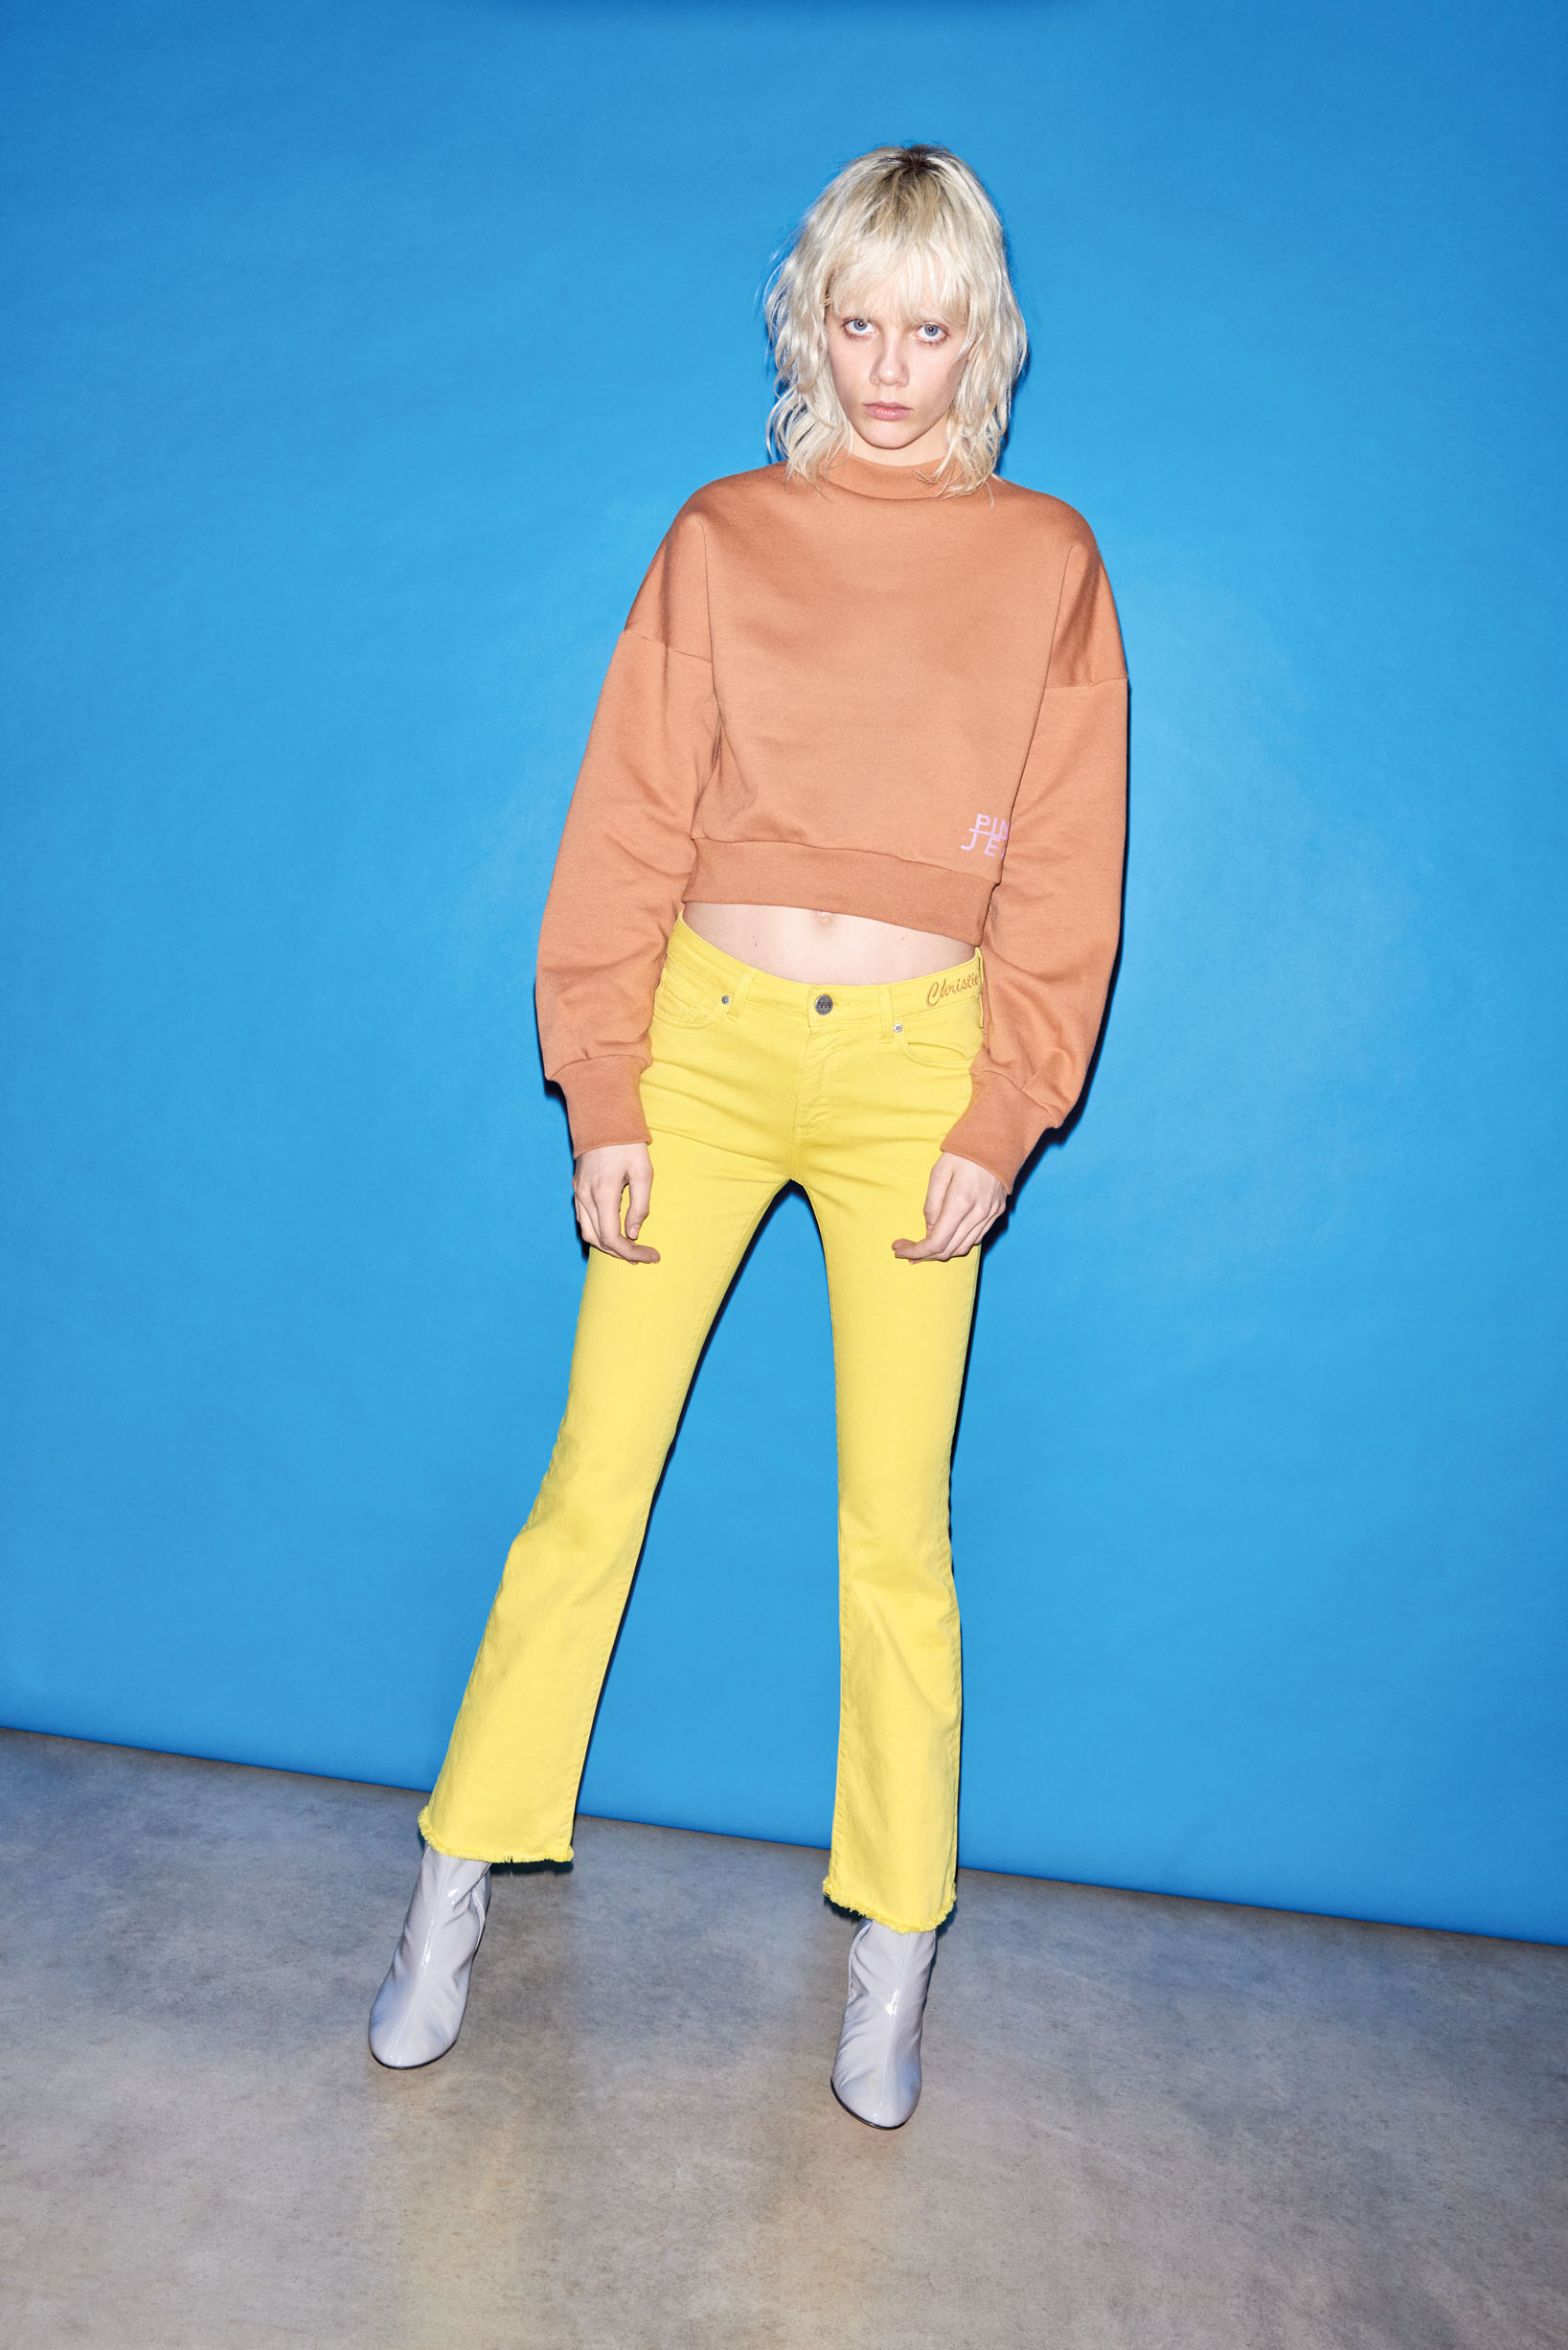 Pinko Jeans FW 17-18 Lookbook | Marco Pietracupa | Pinko | Sissy Vian | Numerique Retouch Photo Retouching Studio